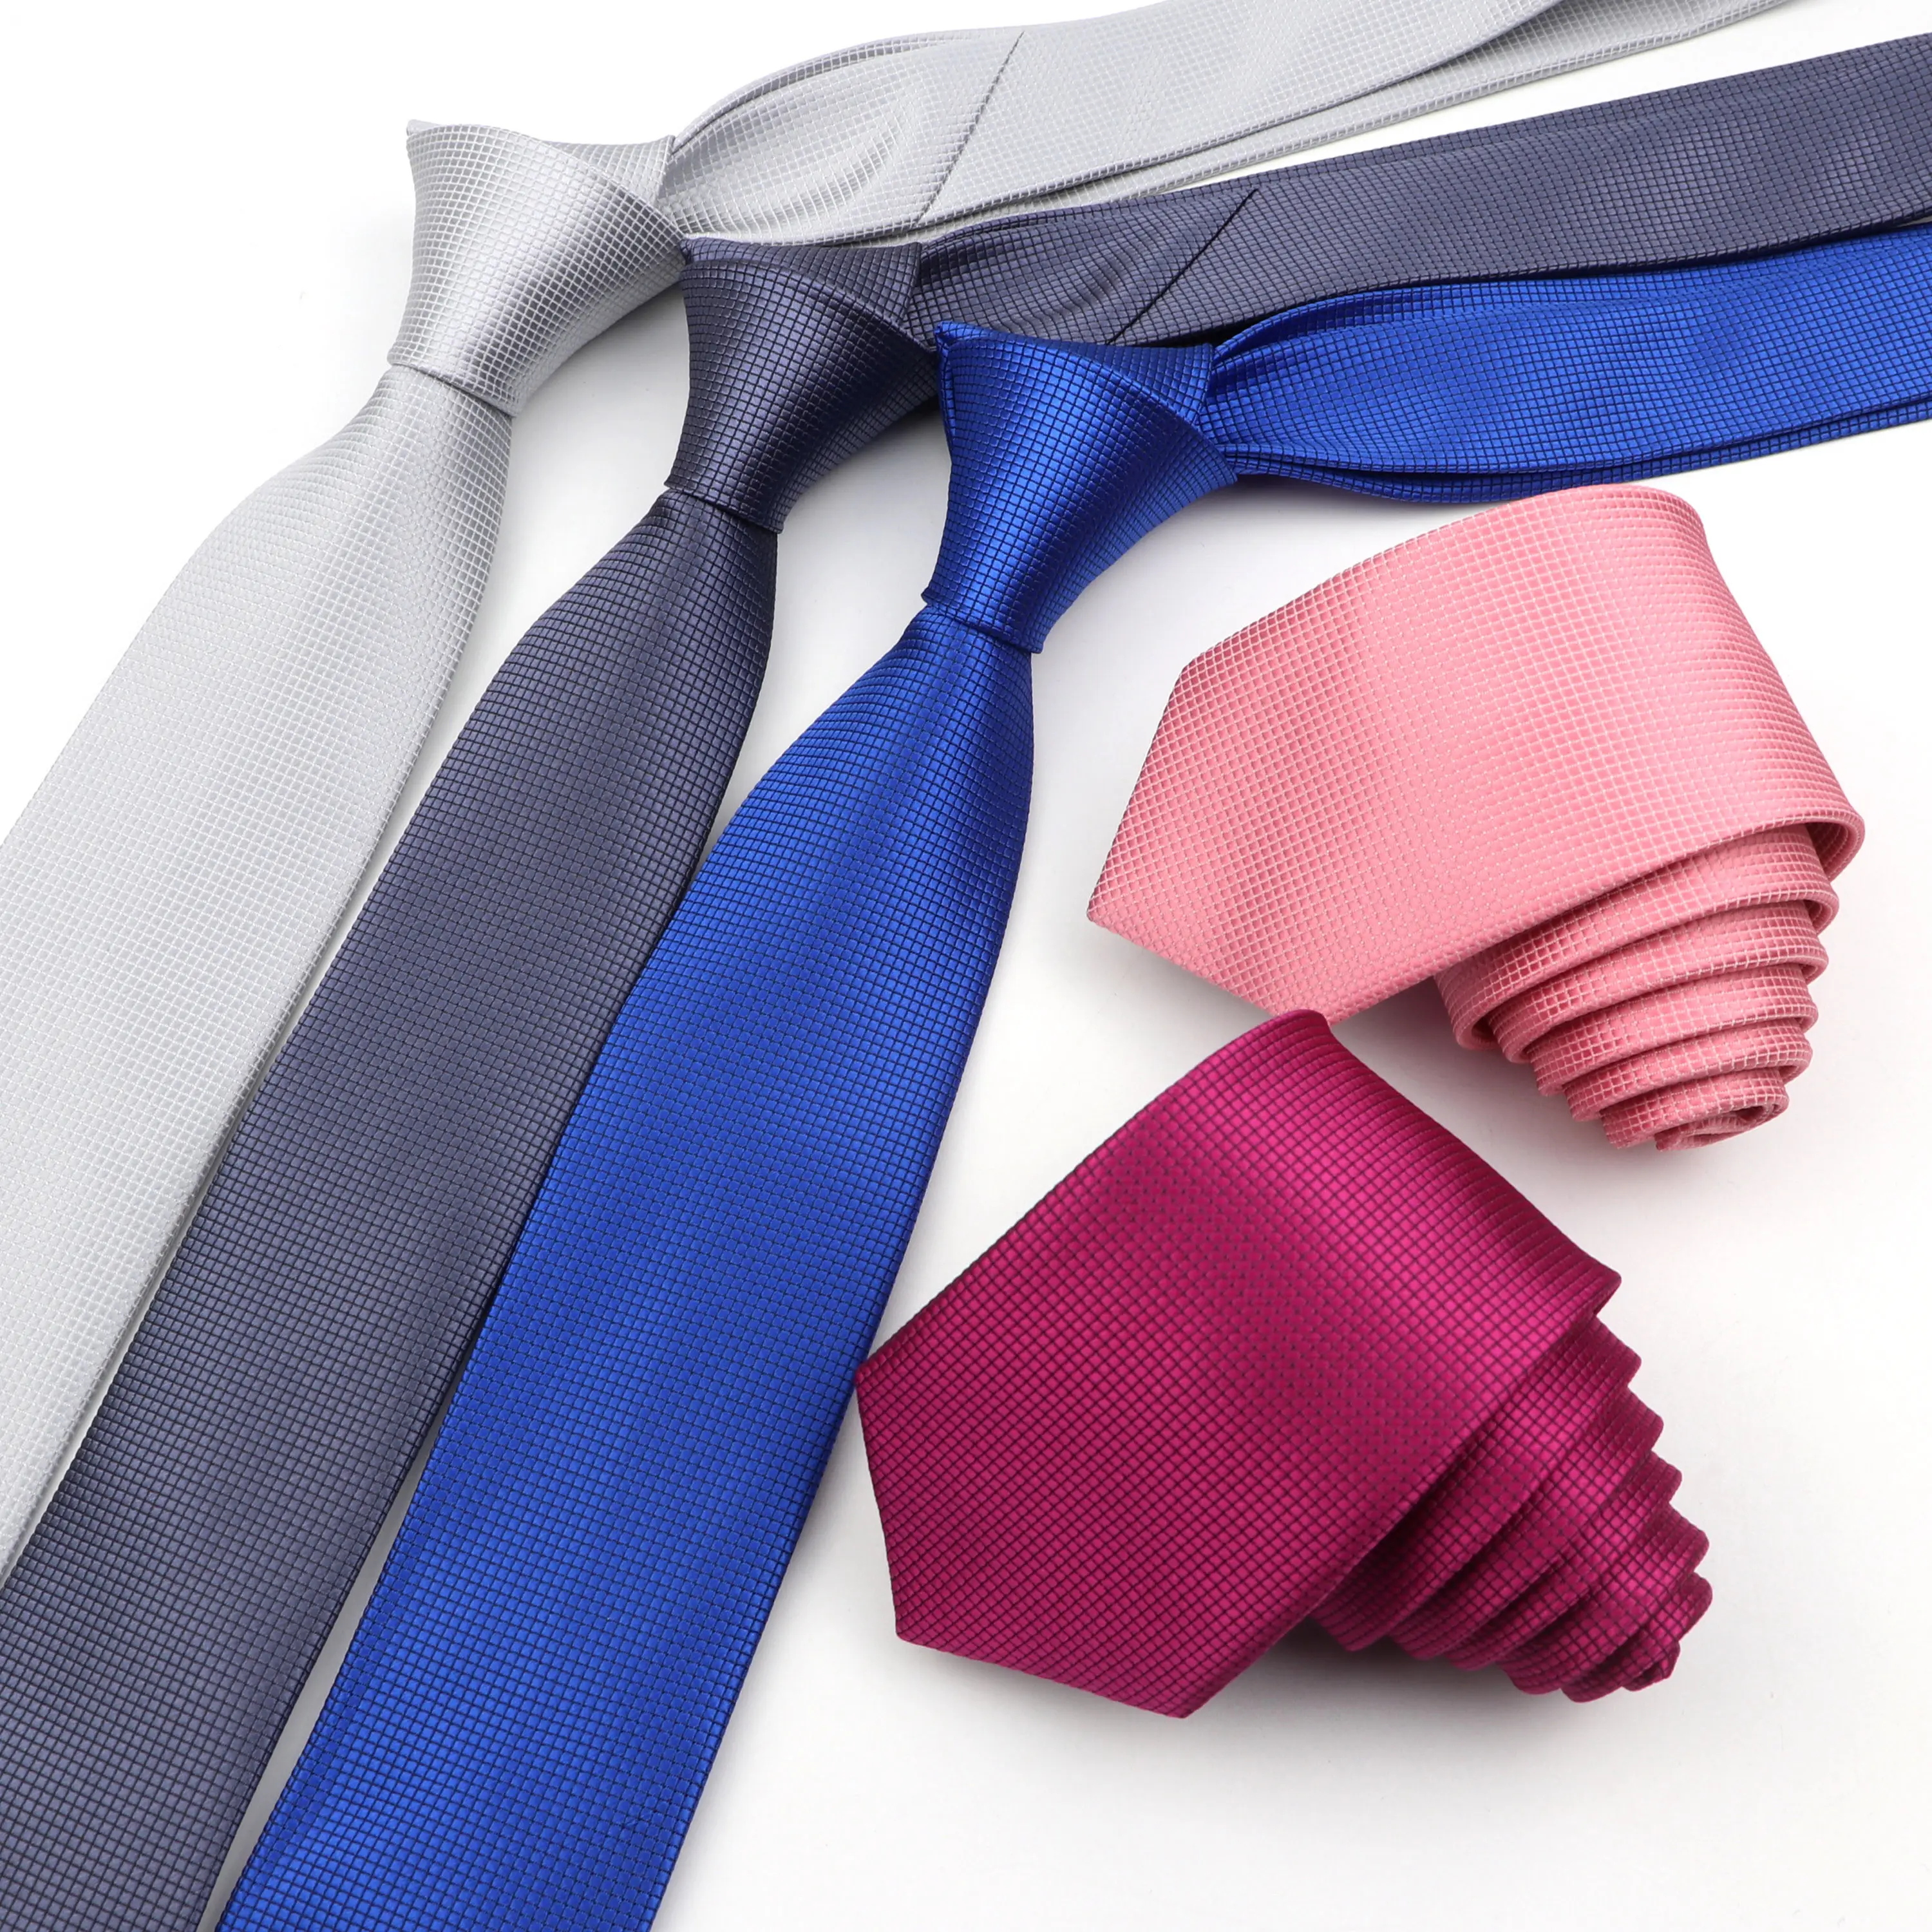 6cm Mens Business Tie Fashion Classic Skinny Fine Grid Necktie Wine Red Blue Pink Champagne Suit Cravat Wedding Party Accessory